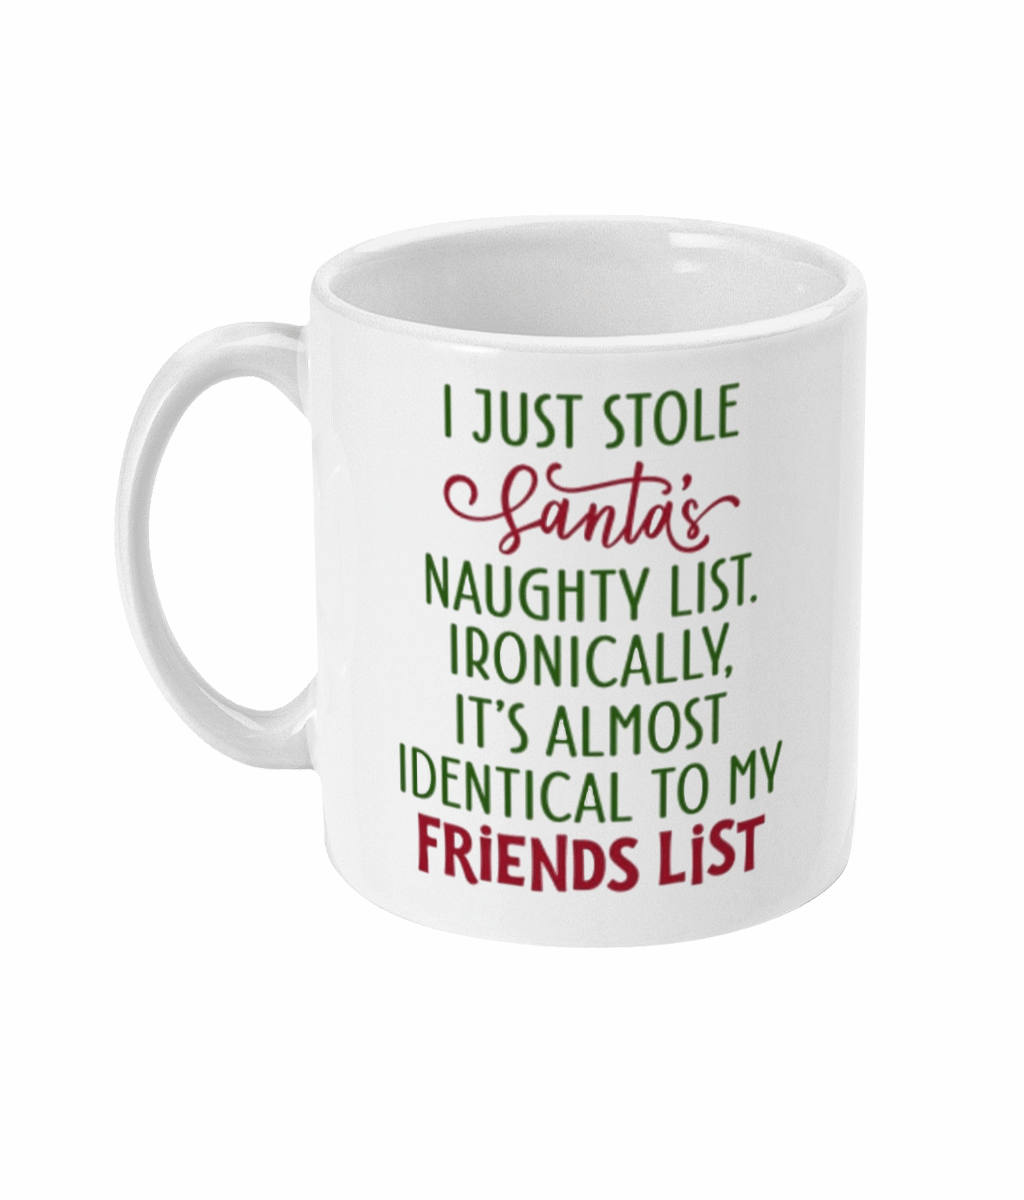  Santa's Naughty List Coffee or Tea Mug by Free Spirit Accessories sold by Free Spirit Accessories